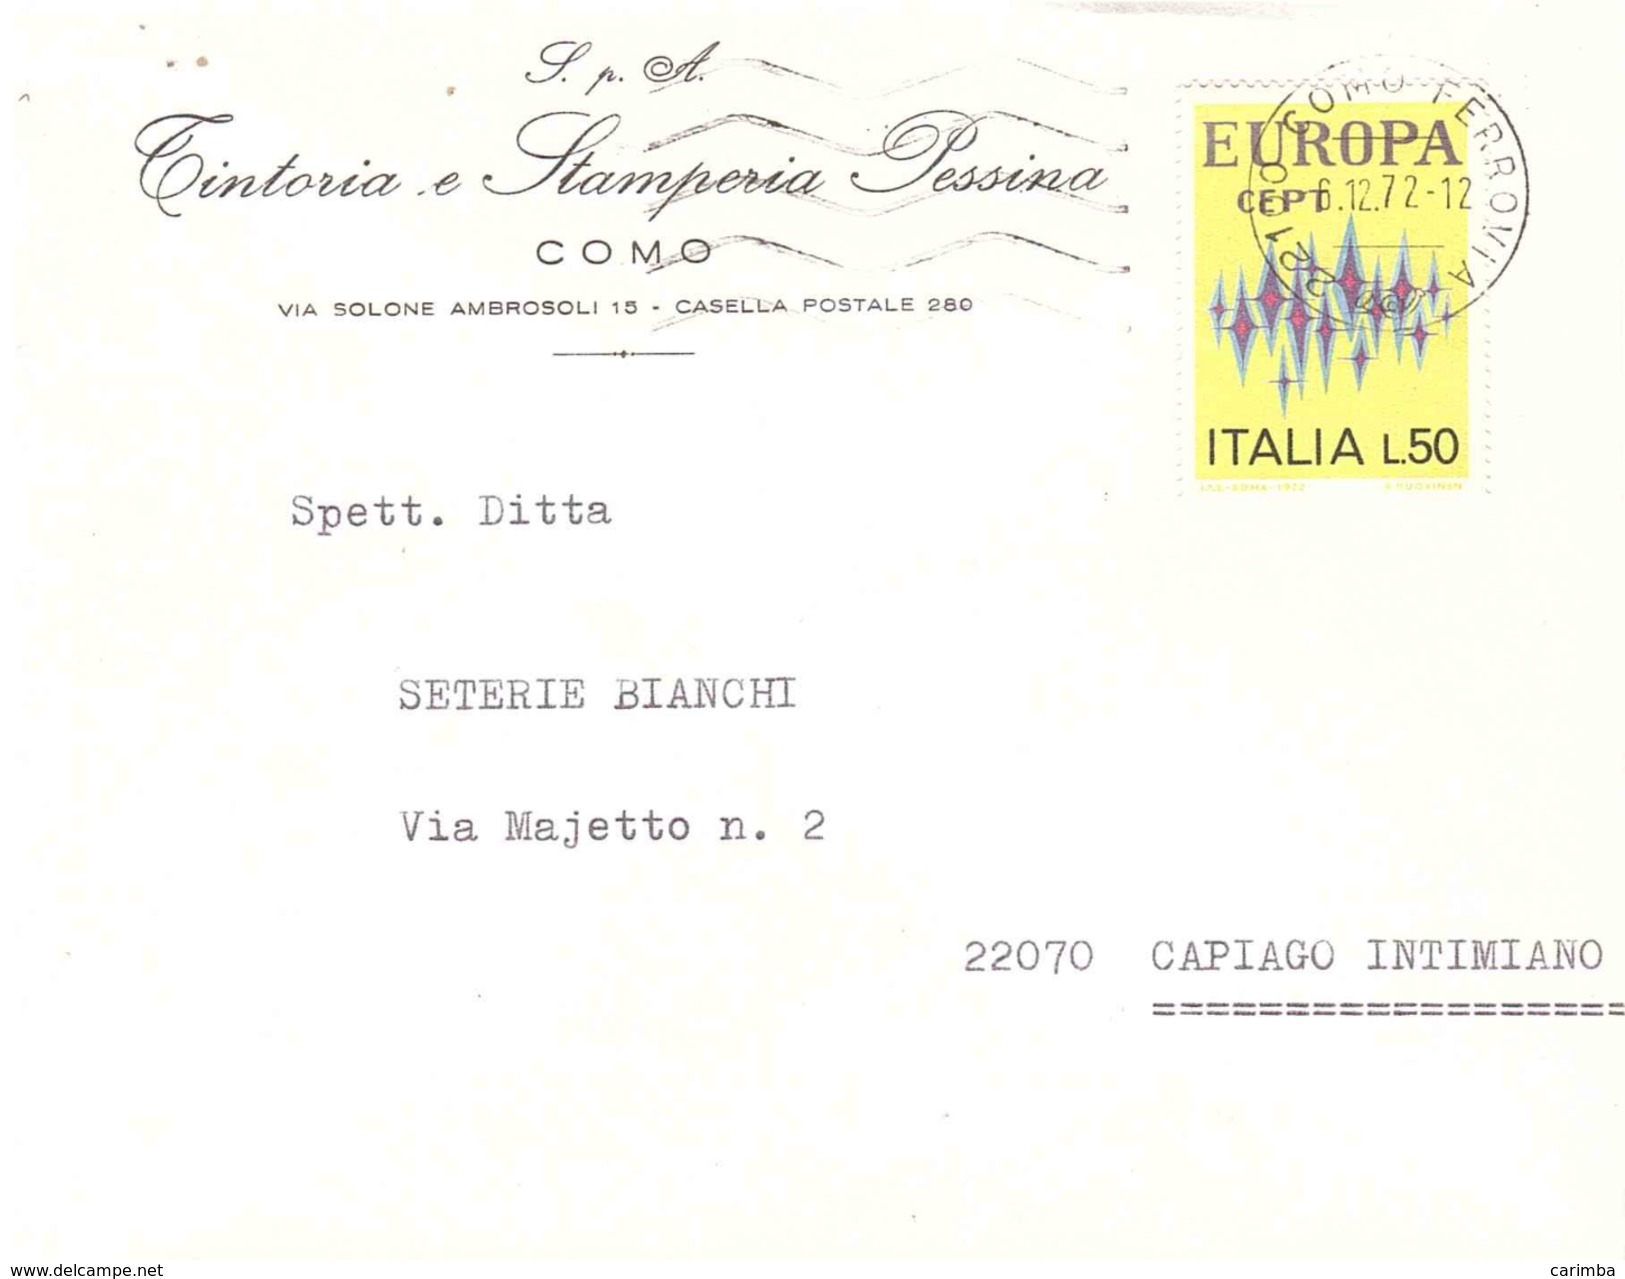 £50 EUROPA BUSTA TINTORIA E STAMPERIA PESSINA COMO - 1972